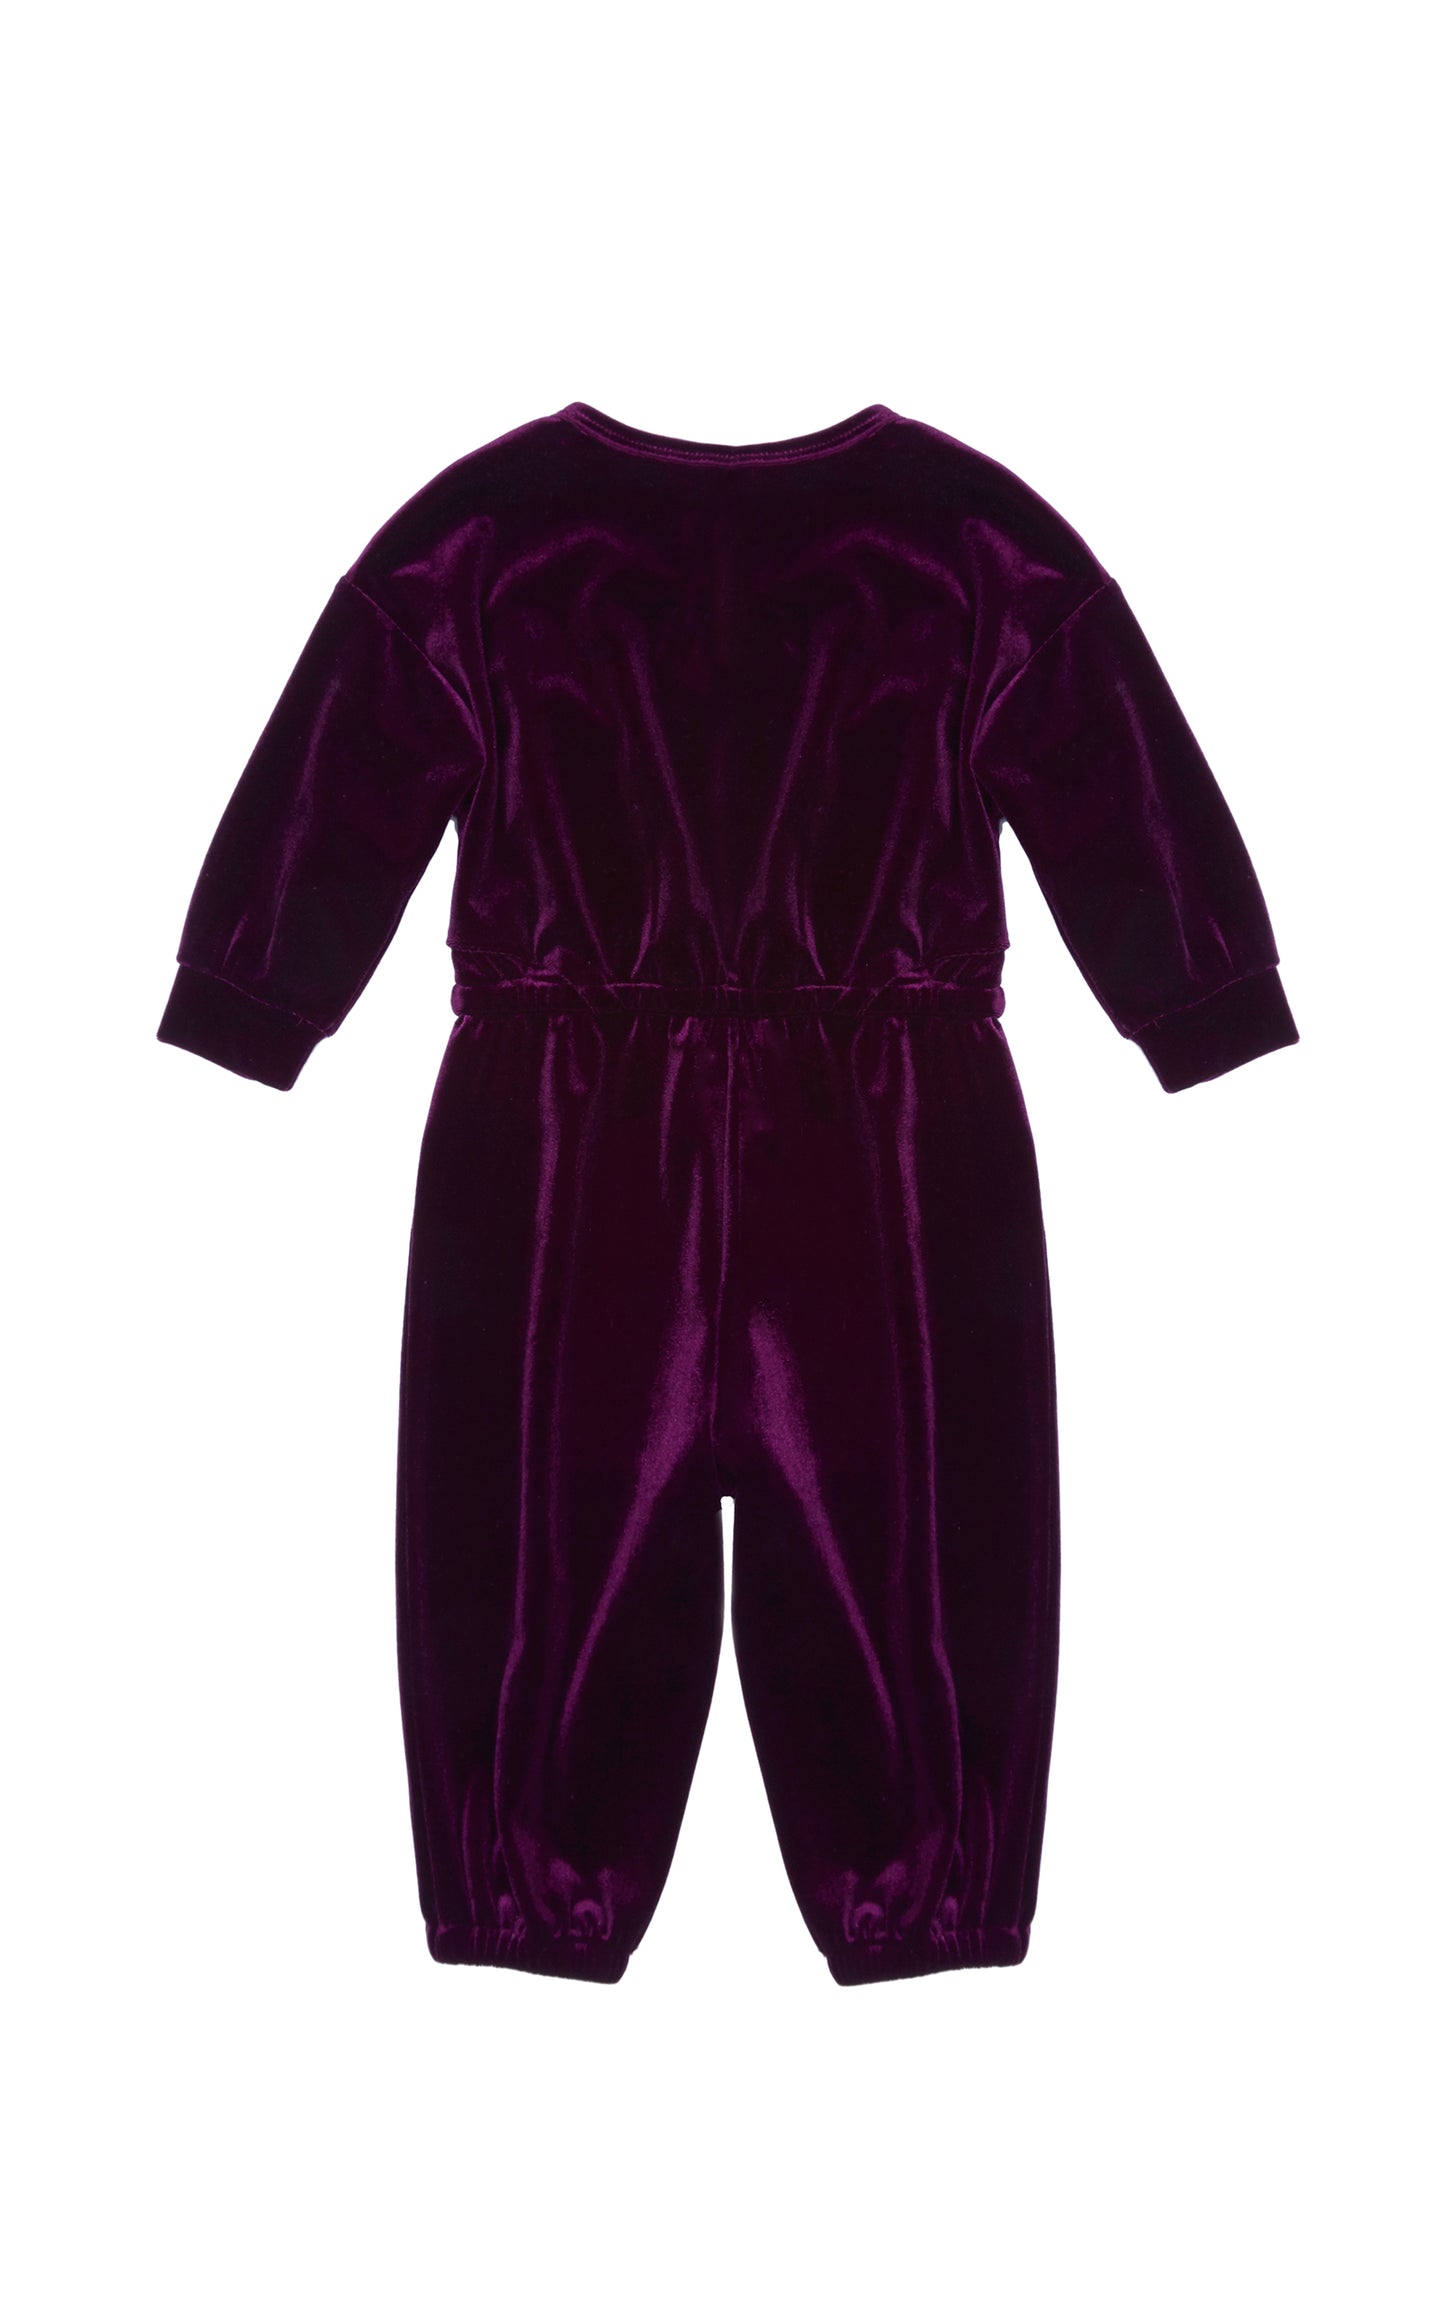 Back view of long-sleeve purple jumpsuit. 